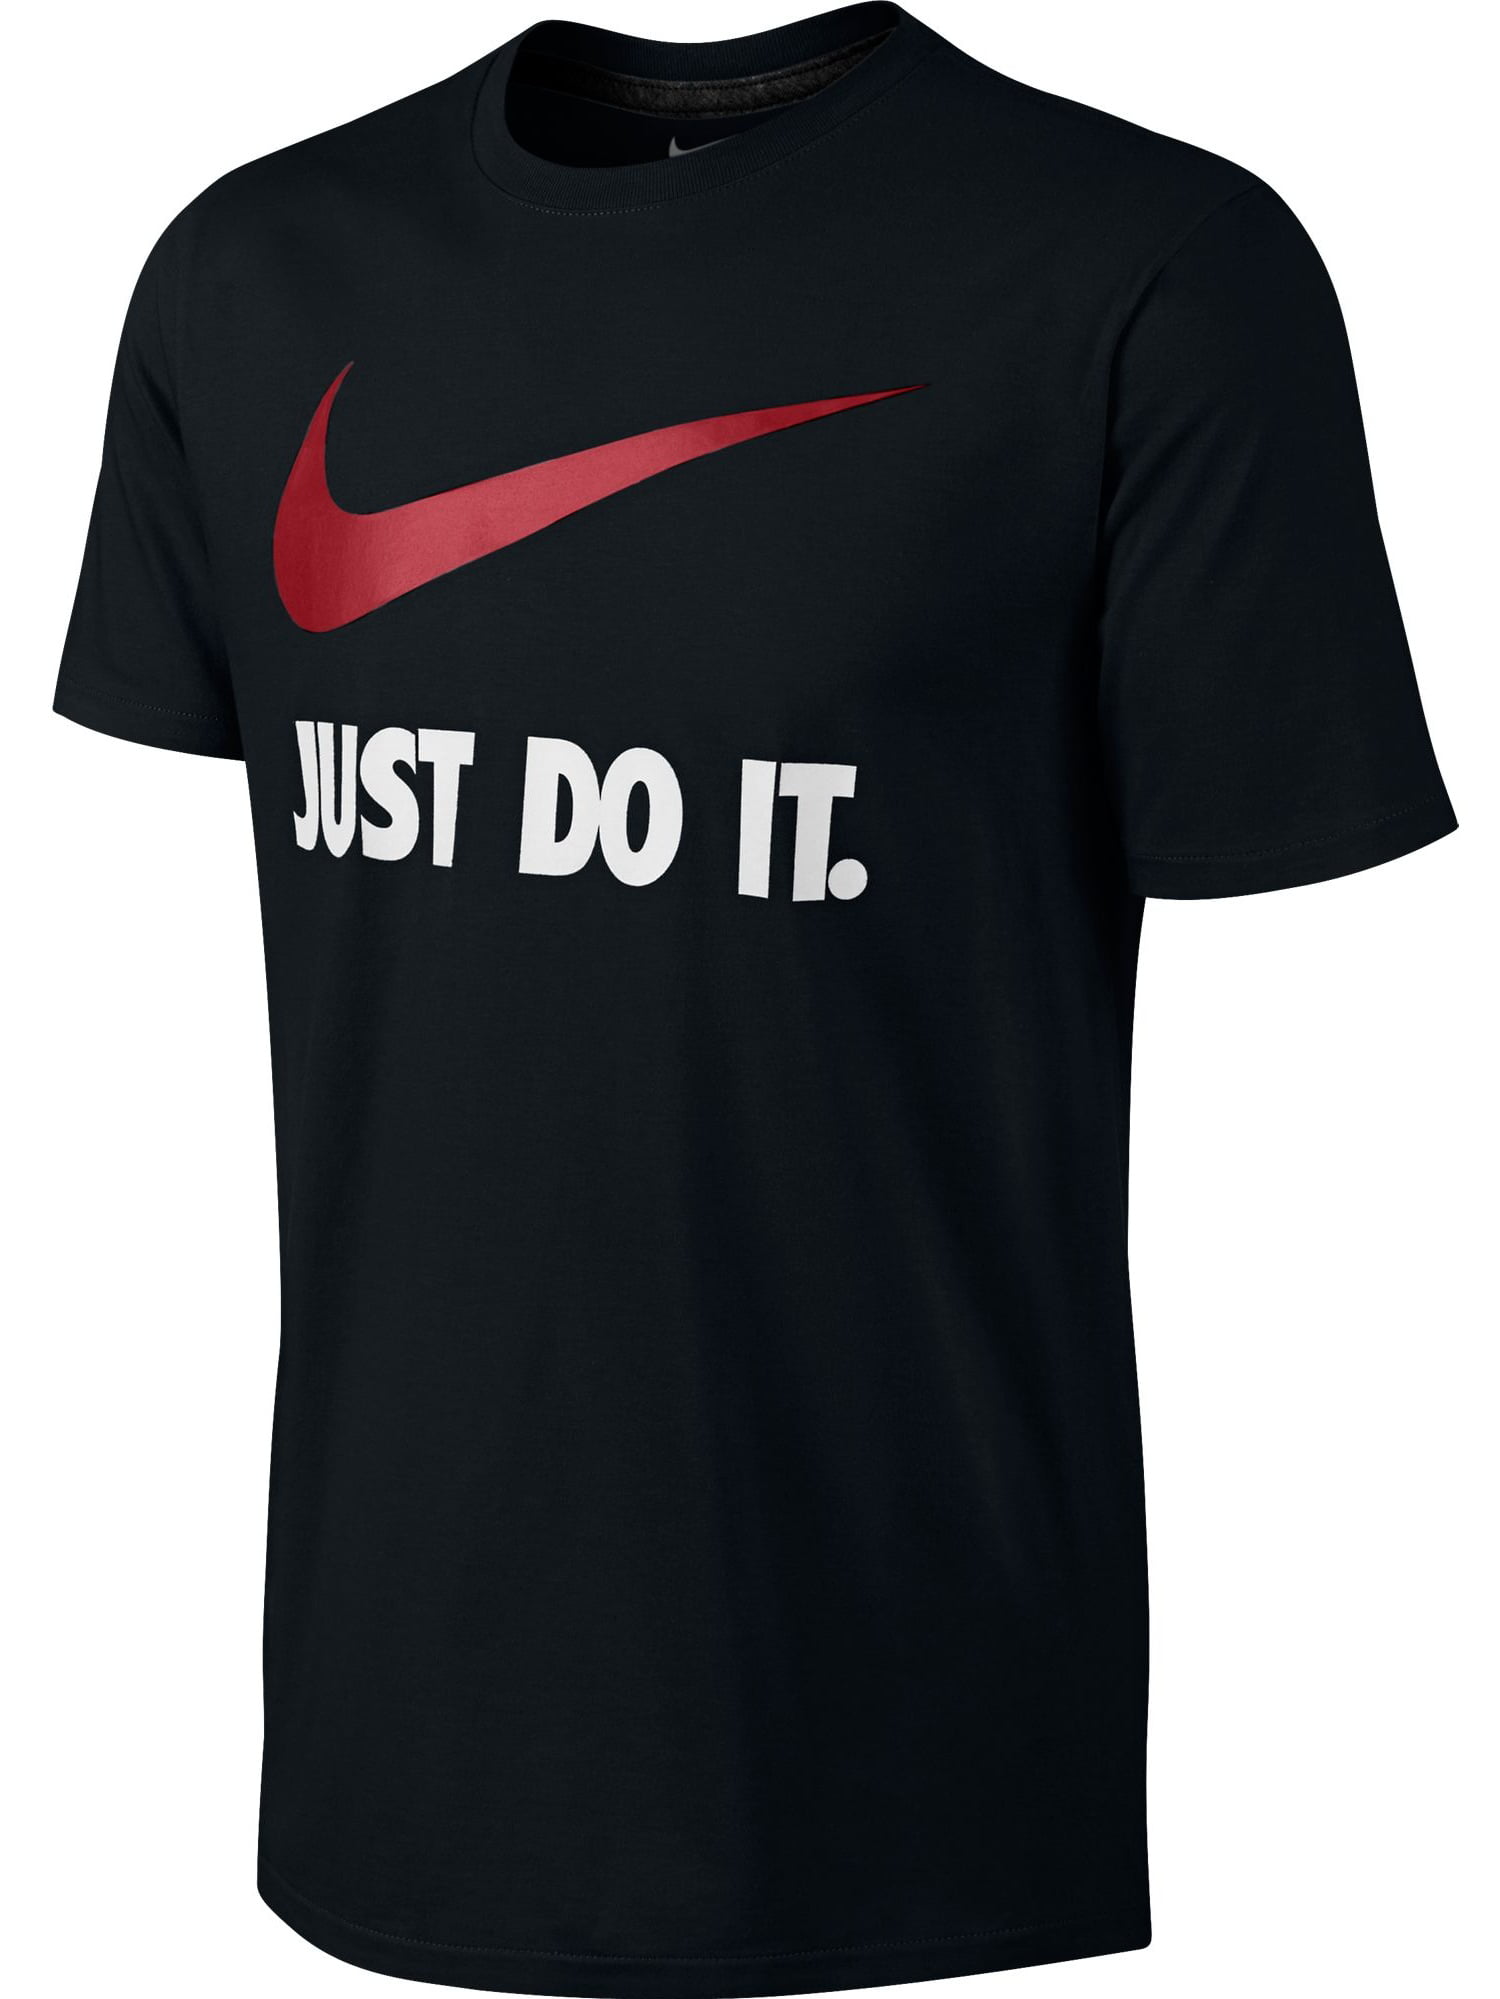 Nike - nike just do it swoosh logo men's t-shirt black/white/red 707360-010 - Walmart.com ...